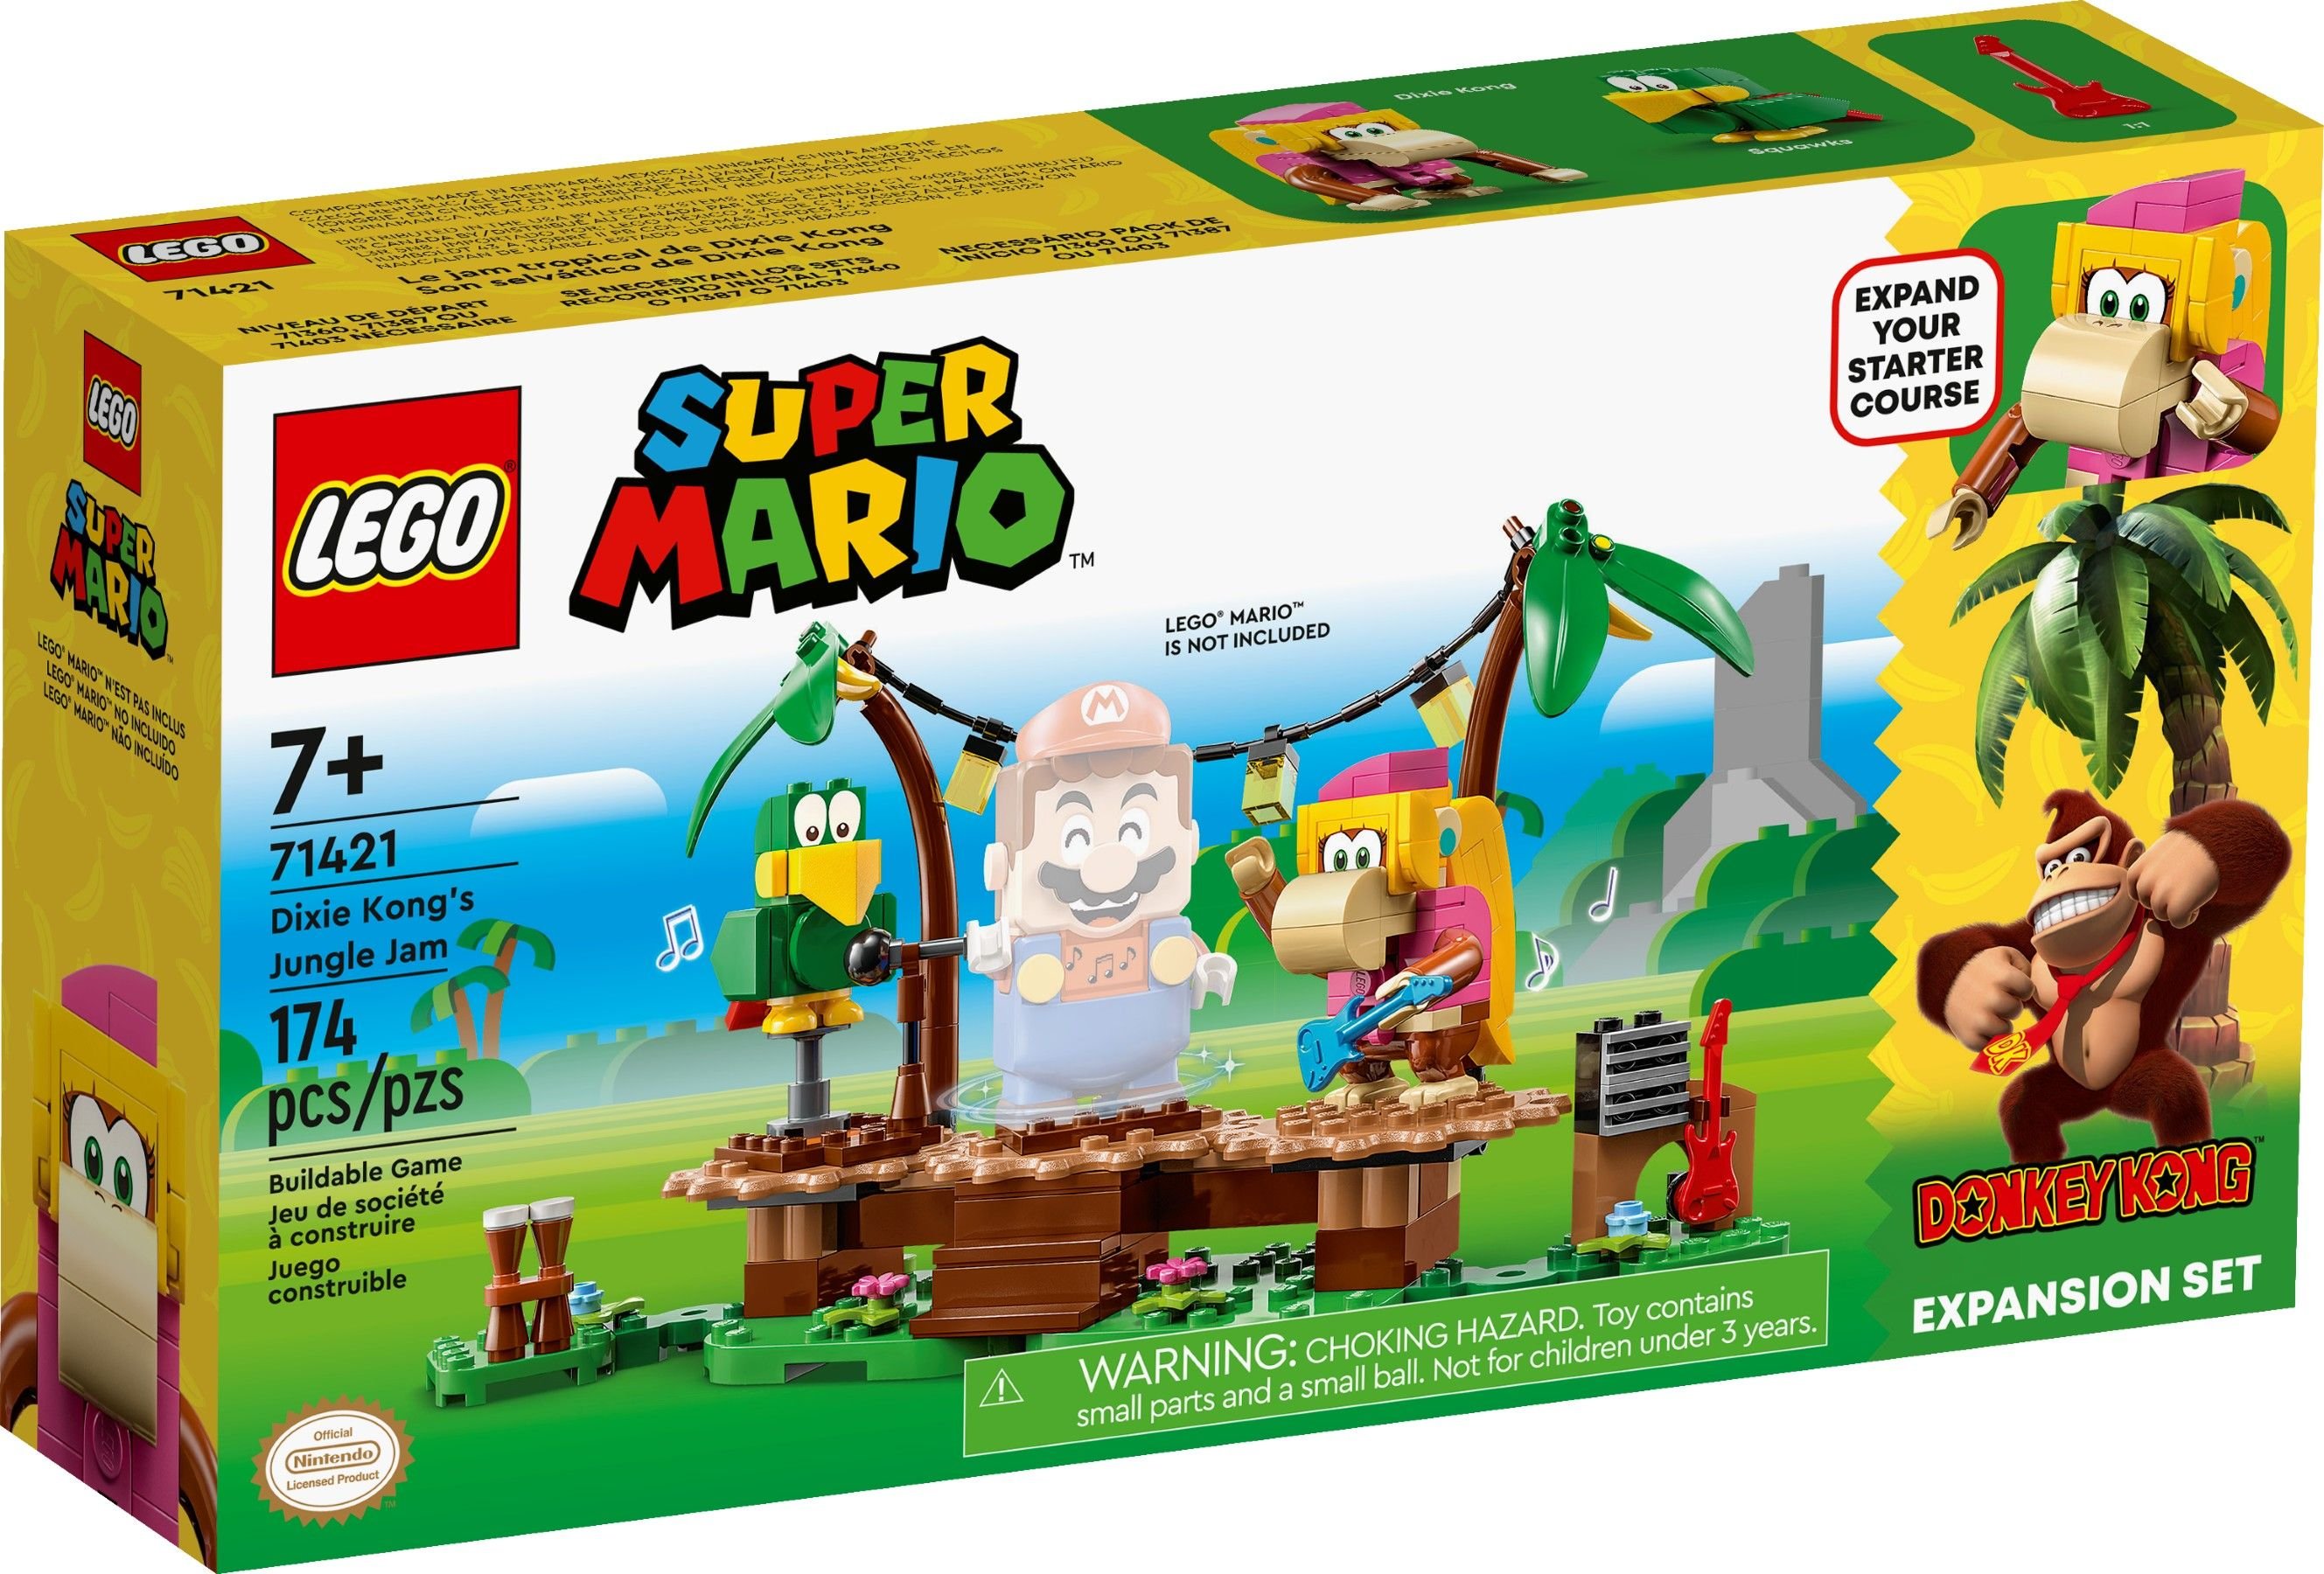 Dixie Kong's Jungle Jam Expansion Set LEGO LEGO Super Mario 71421